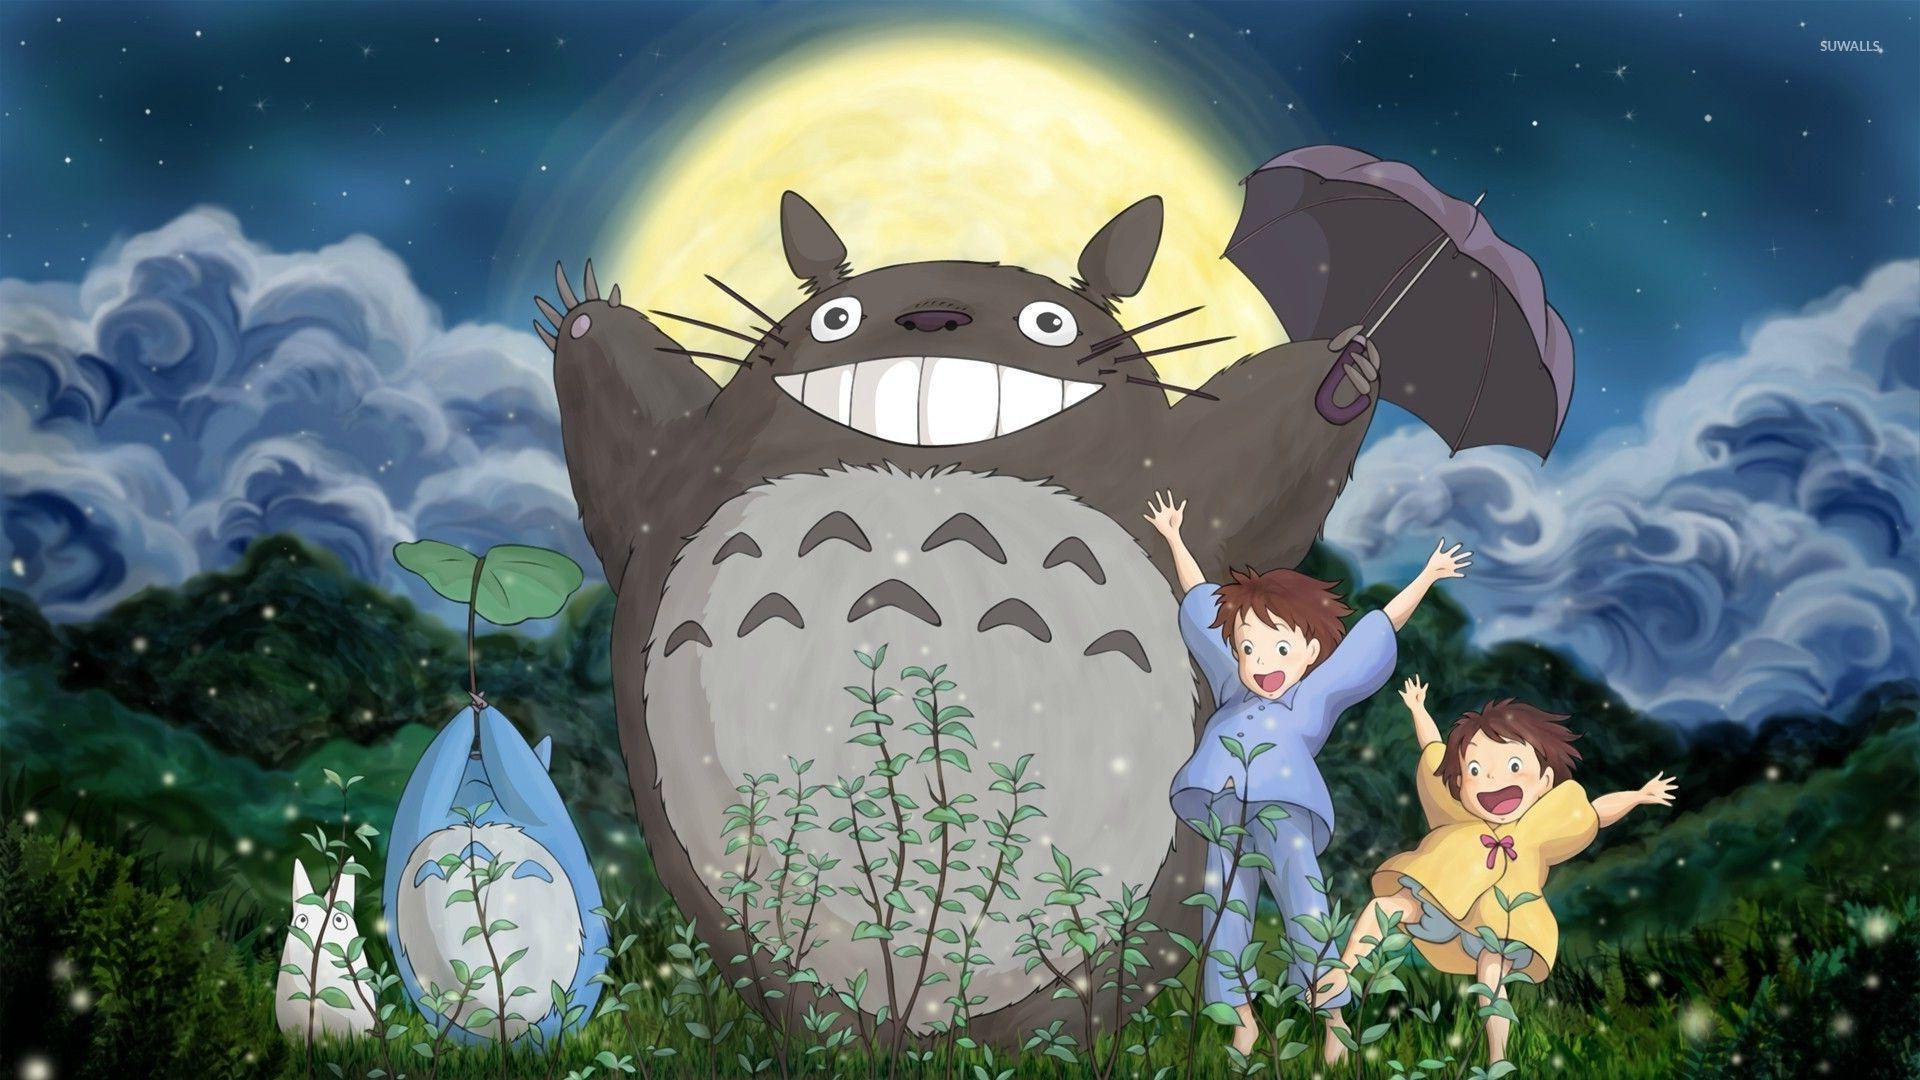 My Neighbor Totoro Wallpapers Top Free My Neighbor Totoro Images, Photos, Reviews